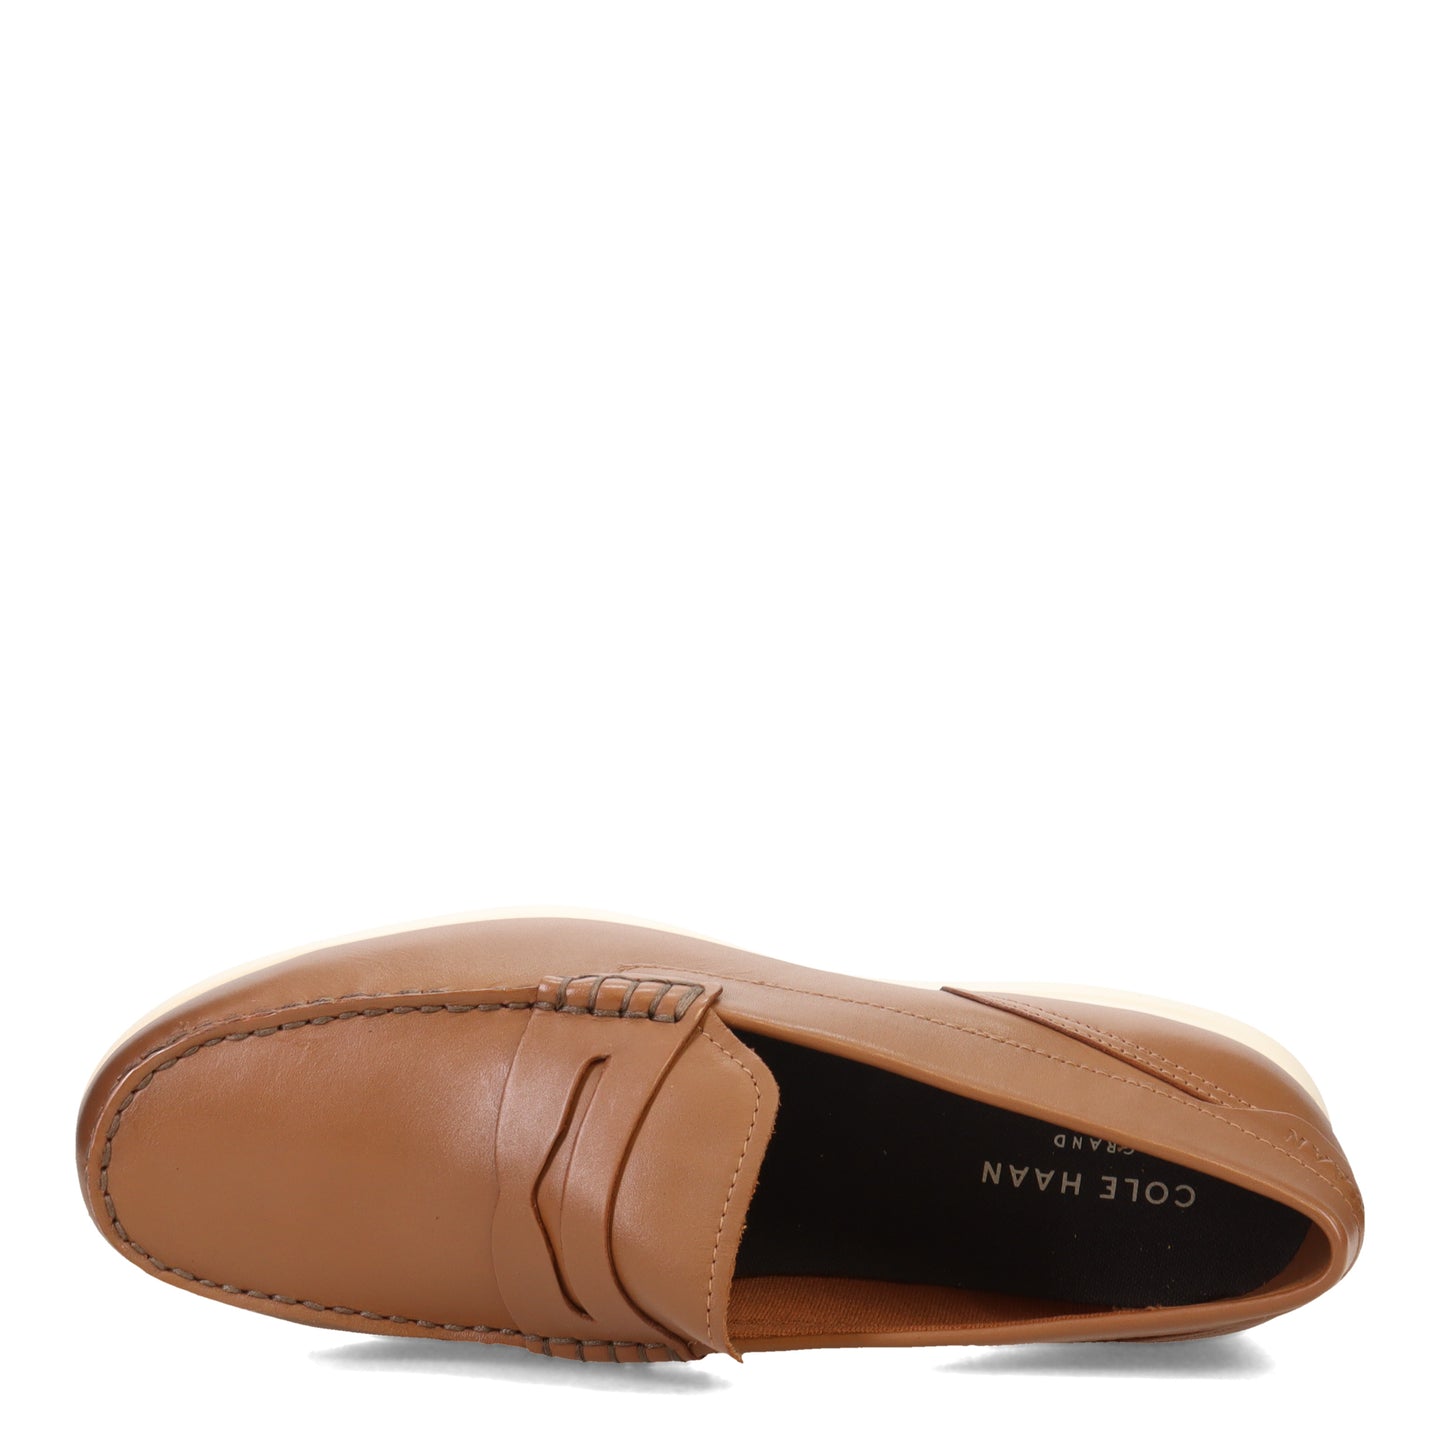 Peltz Shoes  Men's Cole Haan Grand Atlantic Penny Loafer HONEY C36002